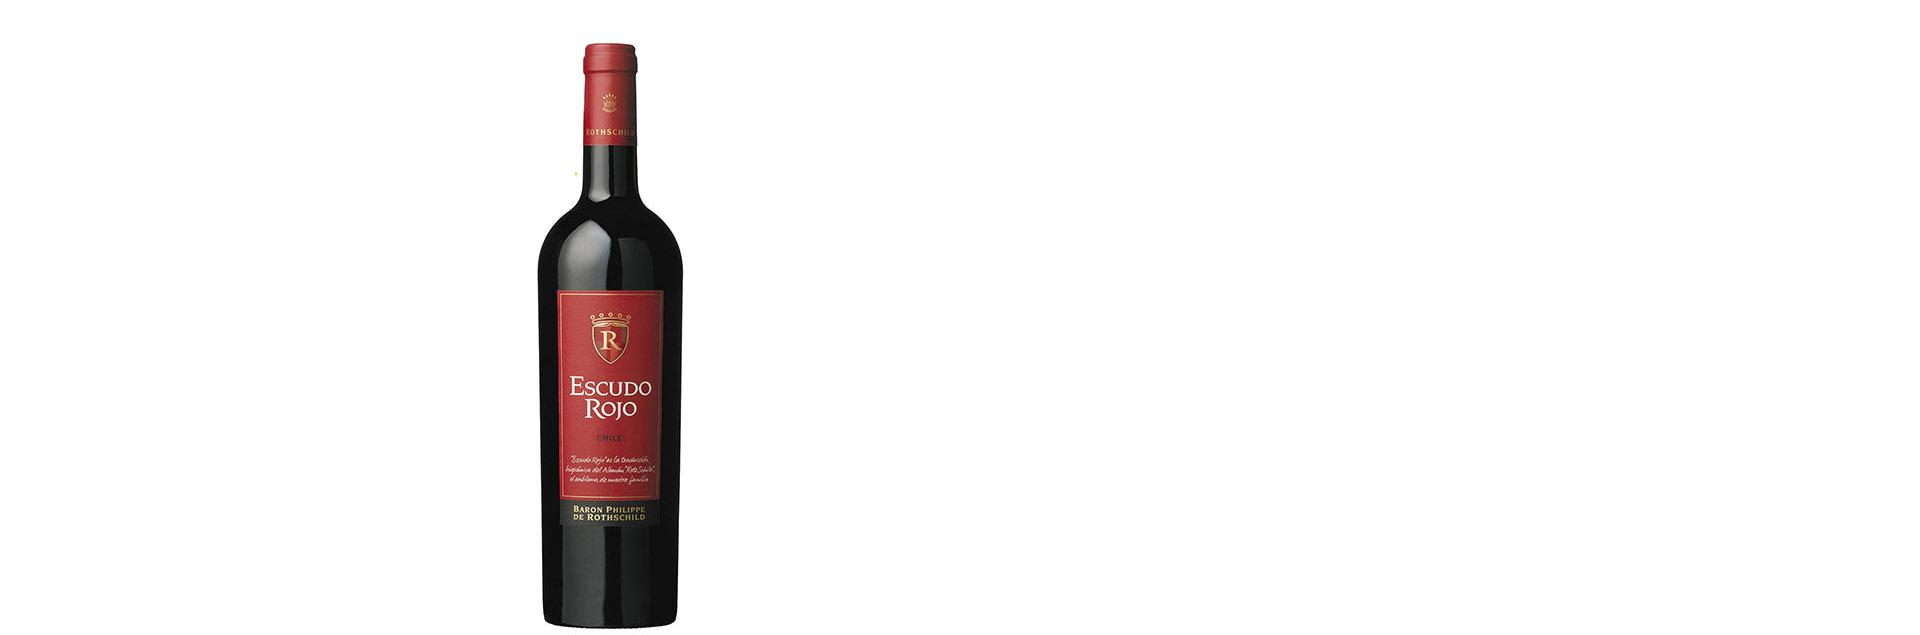 Rượu vang Chile Baron Philippe de Rothschild - Escudo Rojo